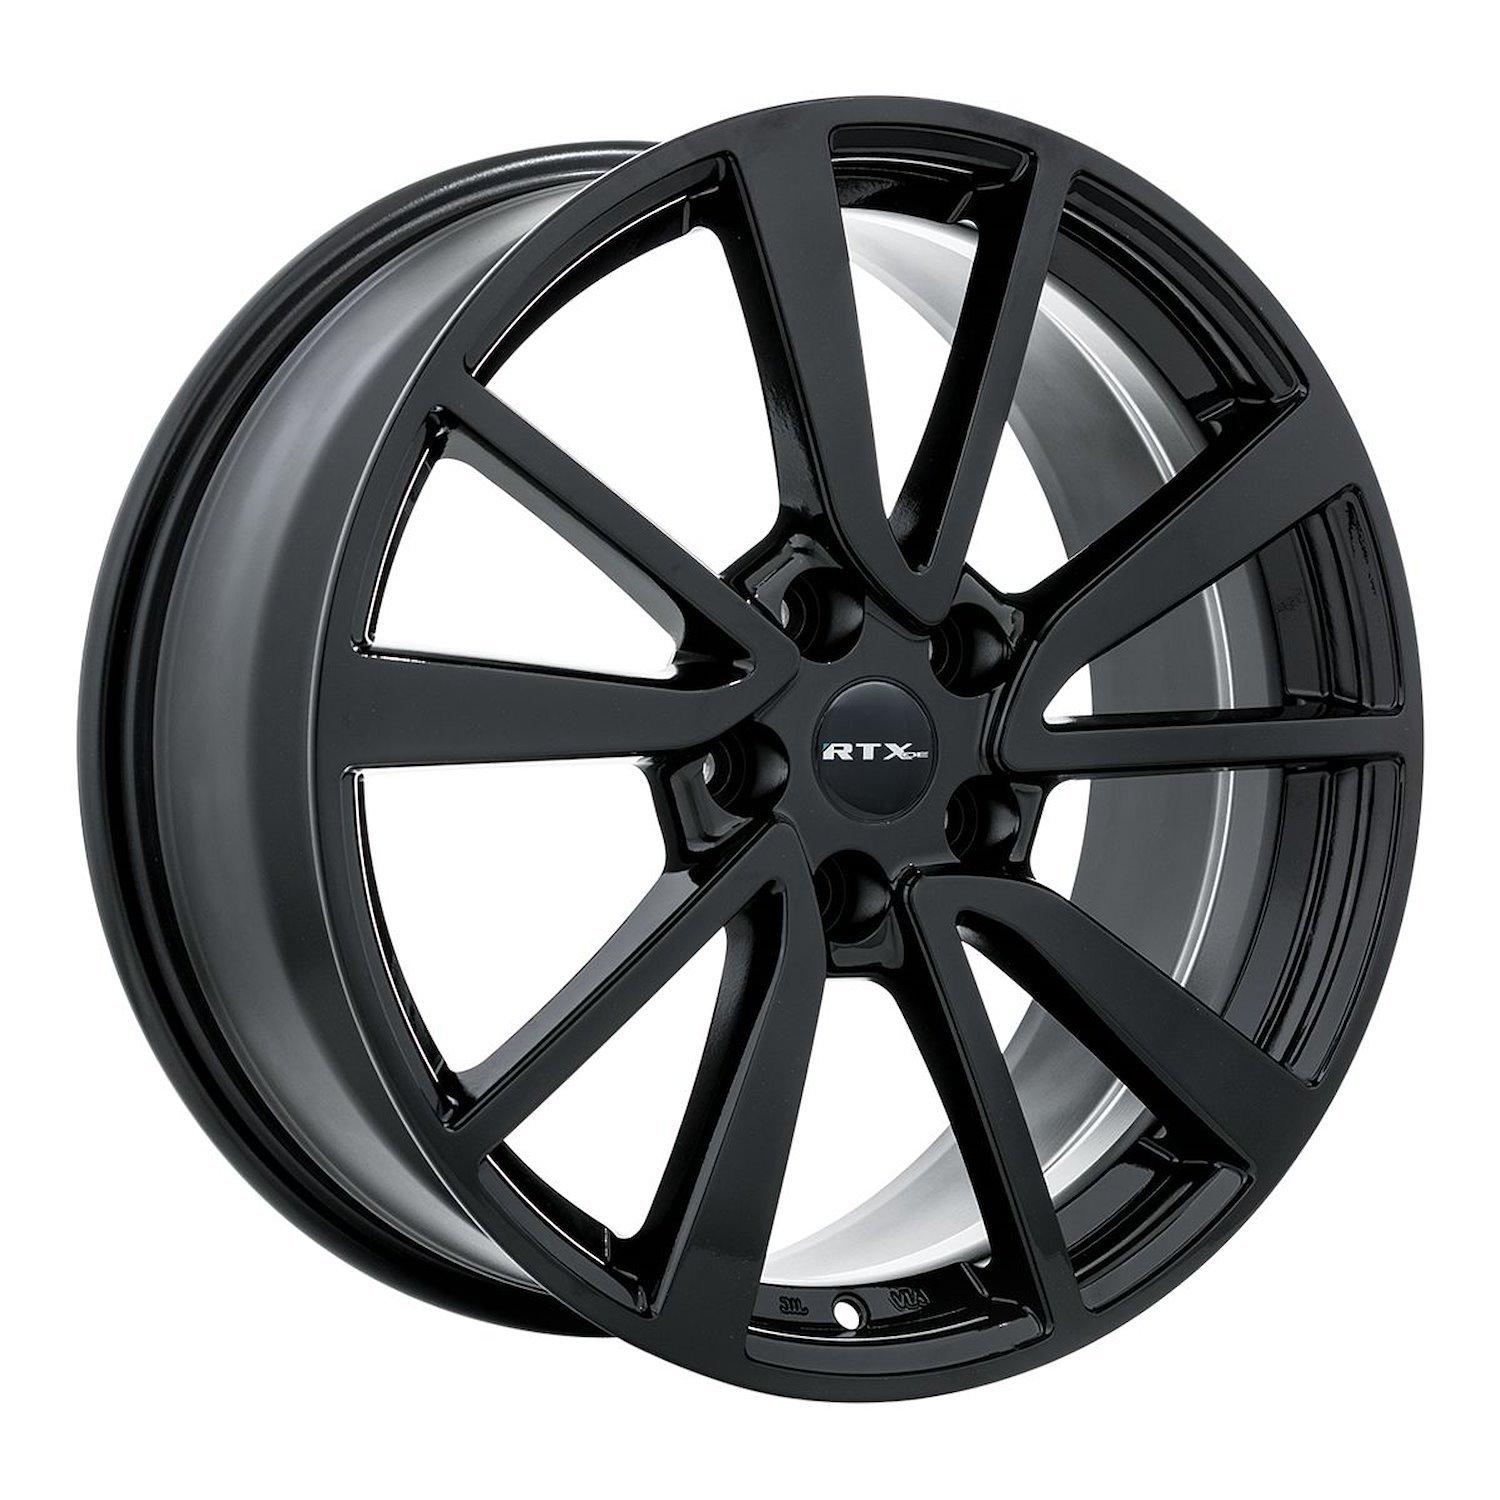 082220 OE-Series Rogue Wheel [Size: 17" x 7"] Gloss Black Finish